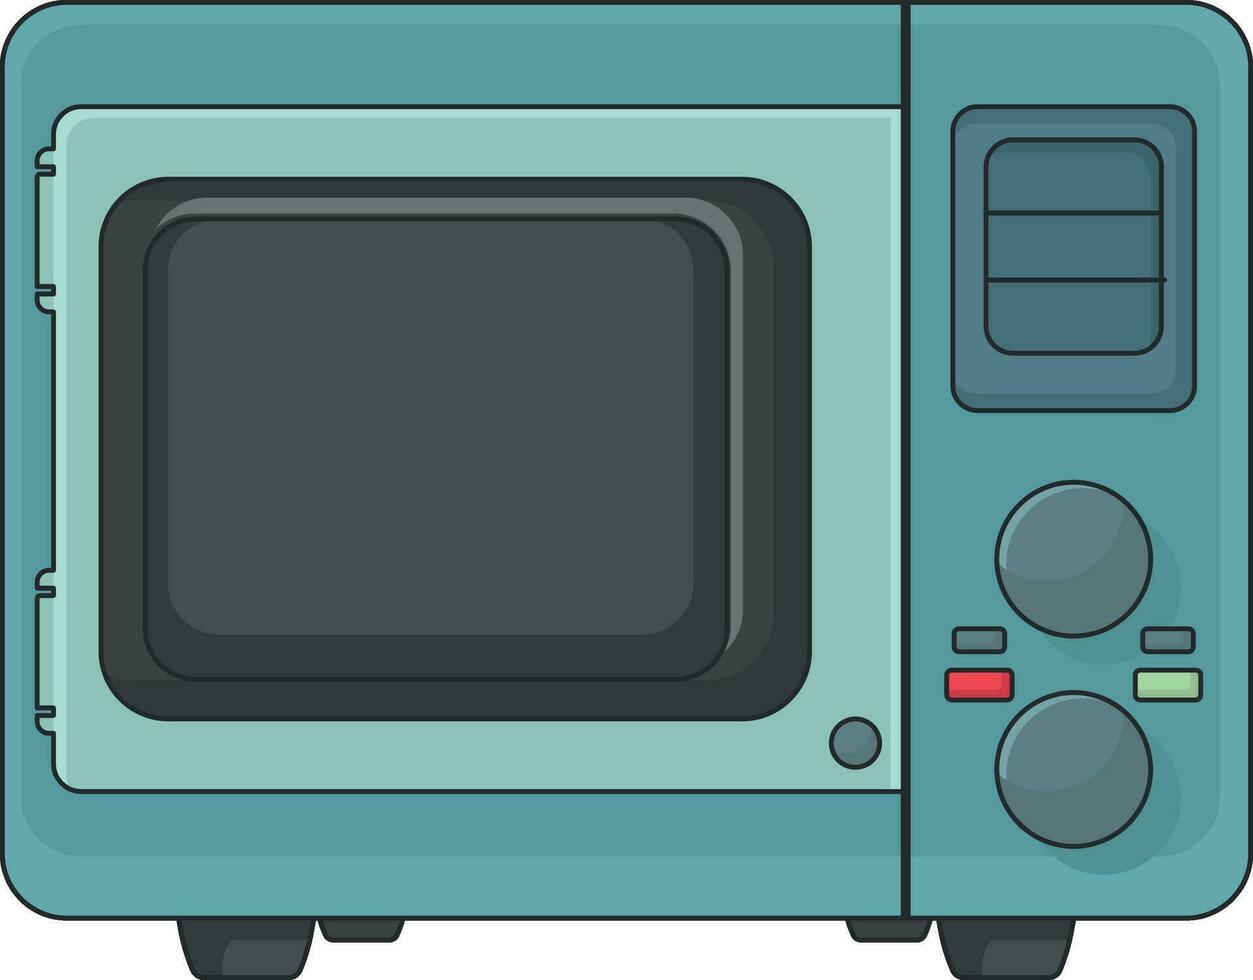 magnetronoven oven illustratie zonder achtergrond vector